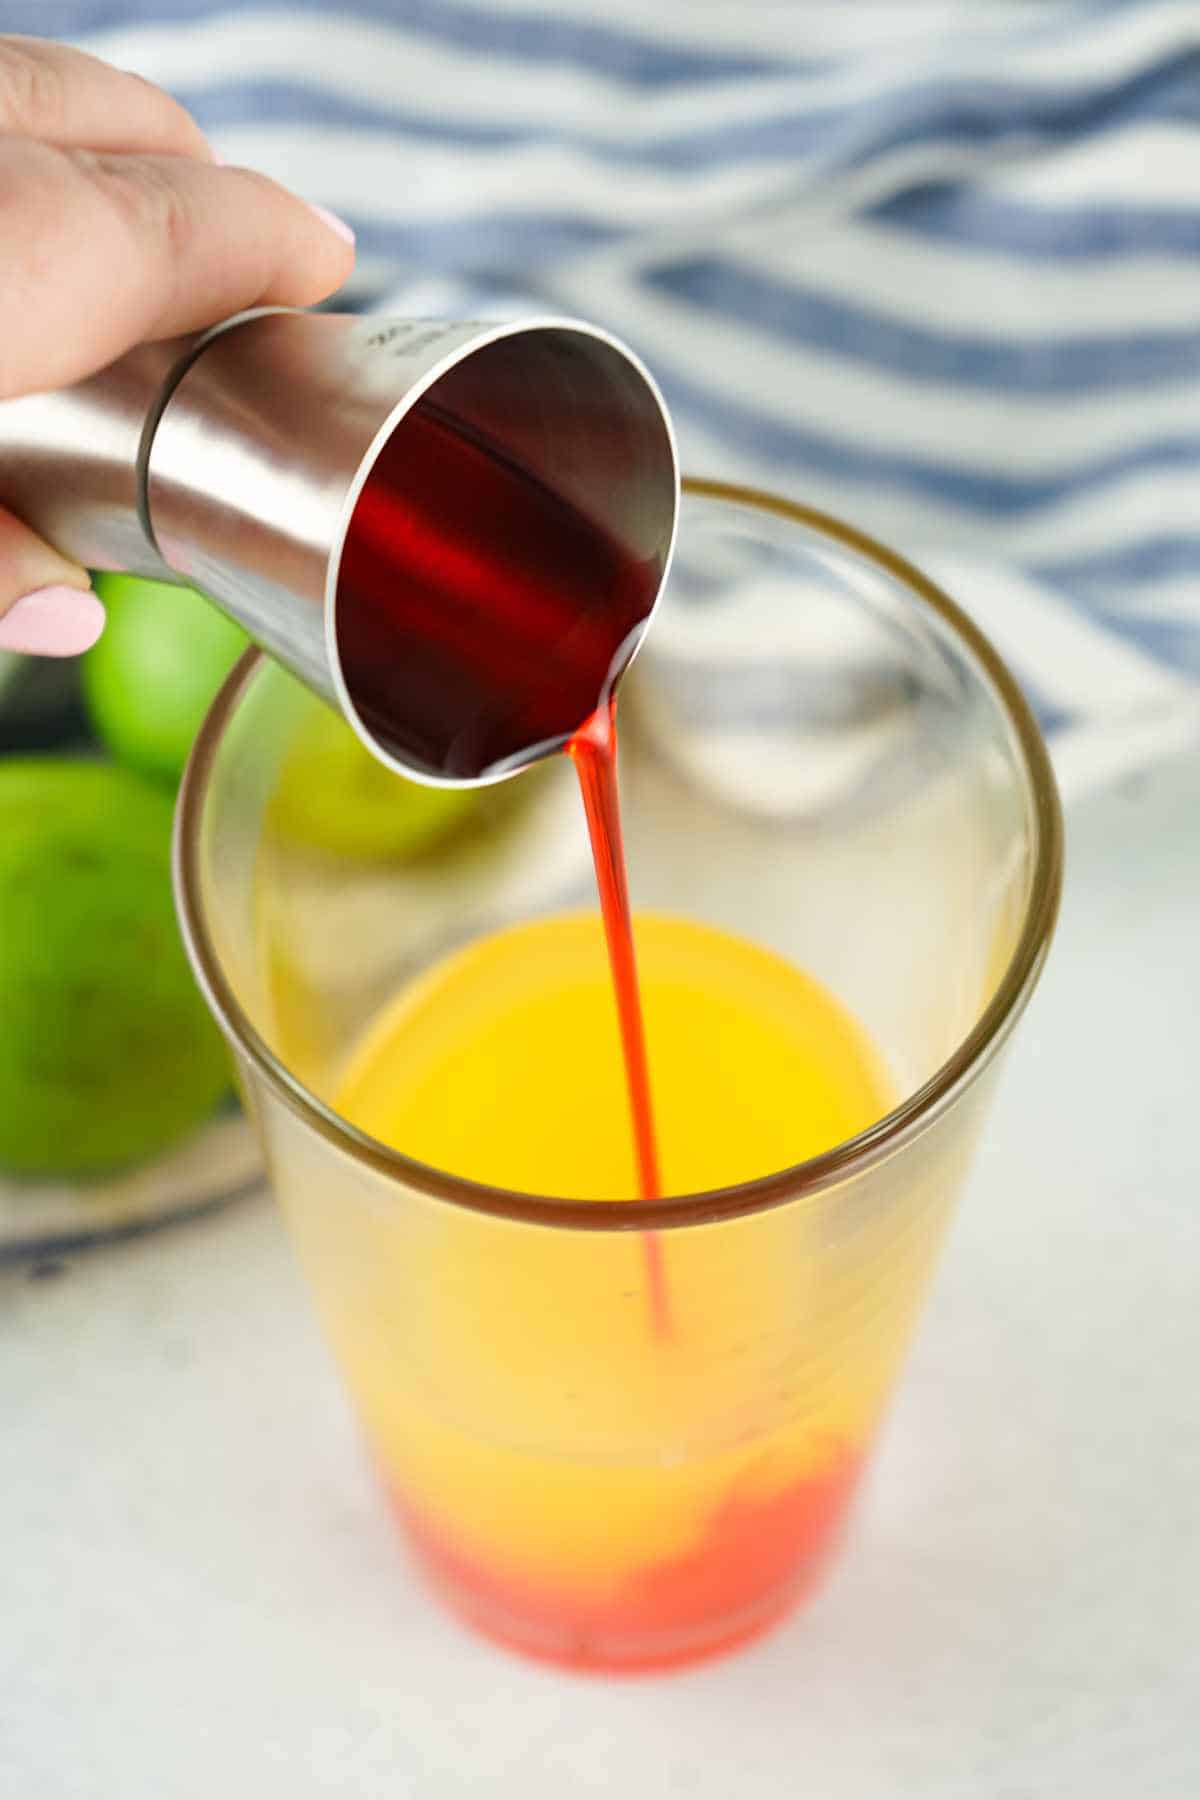 grenadine syrup added to a tumbler of orange juice.